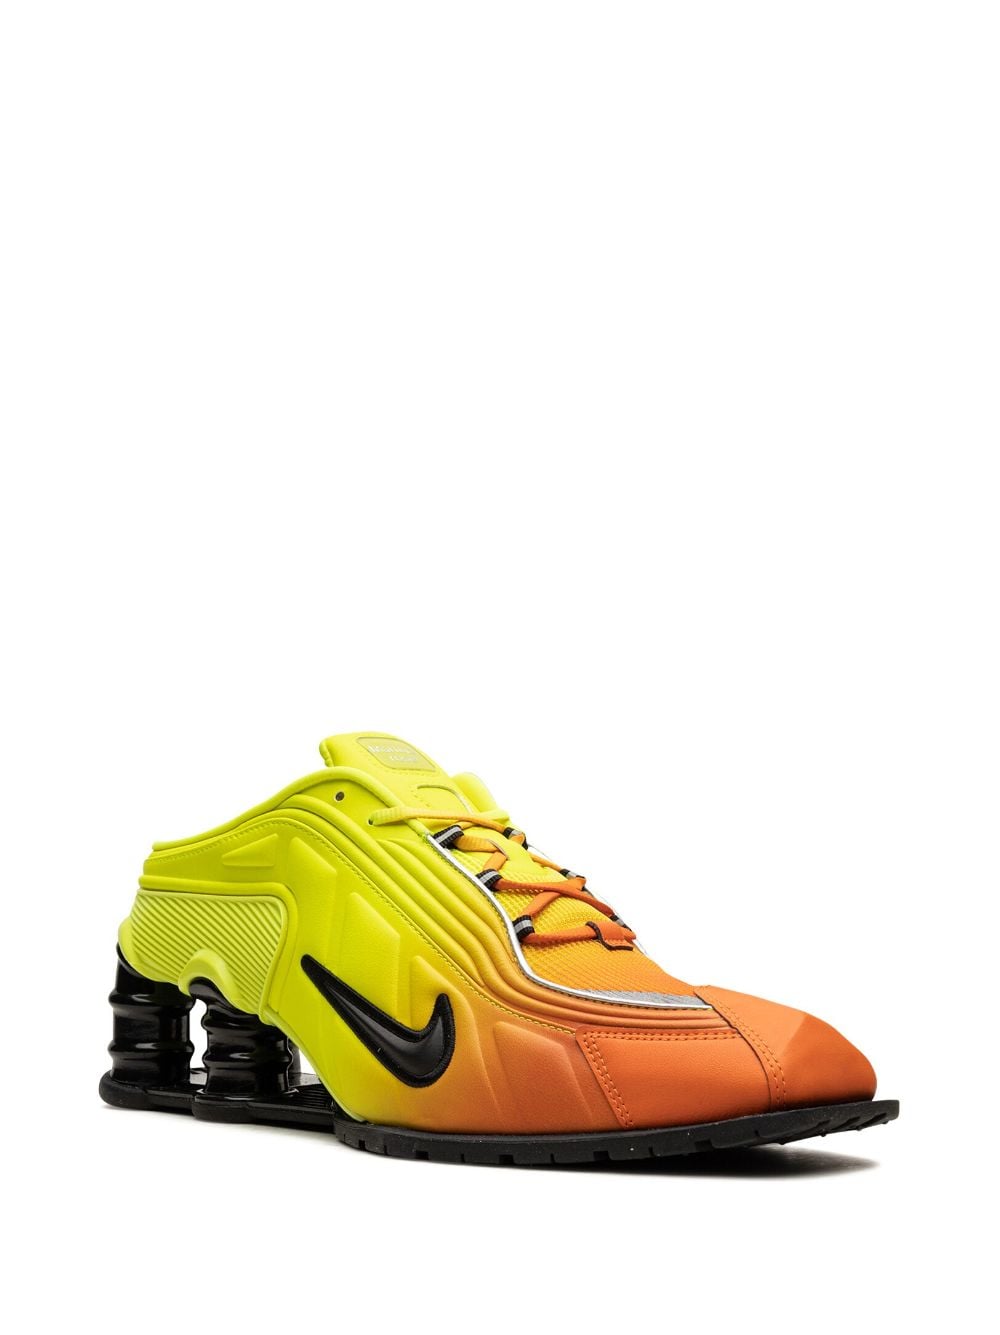 Image 2 of Nike x Martine Rose Shox R4 Mule "Safety Orange" sneakers